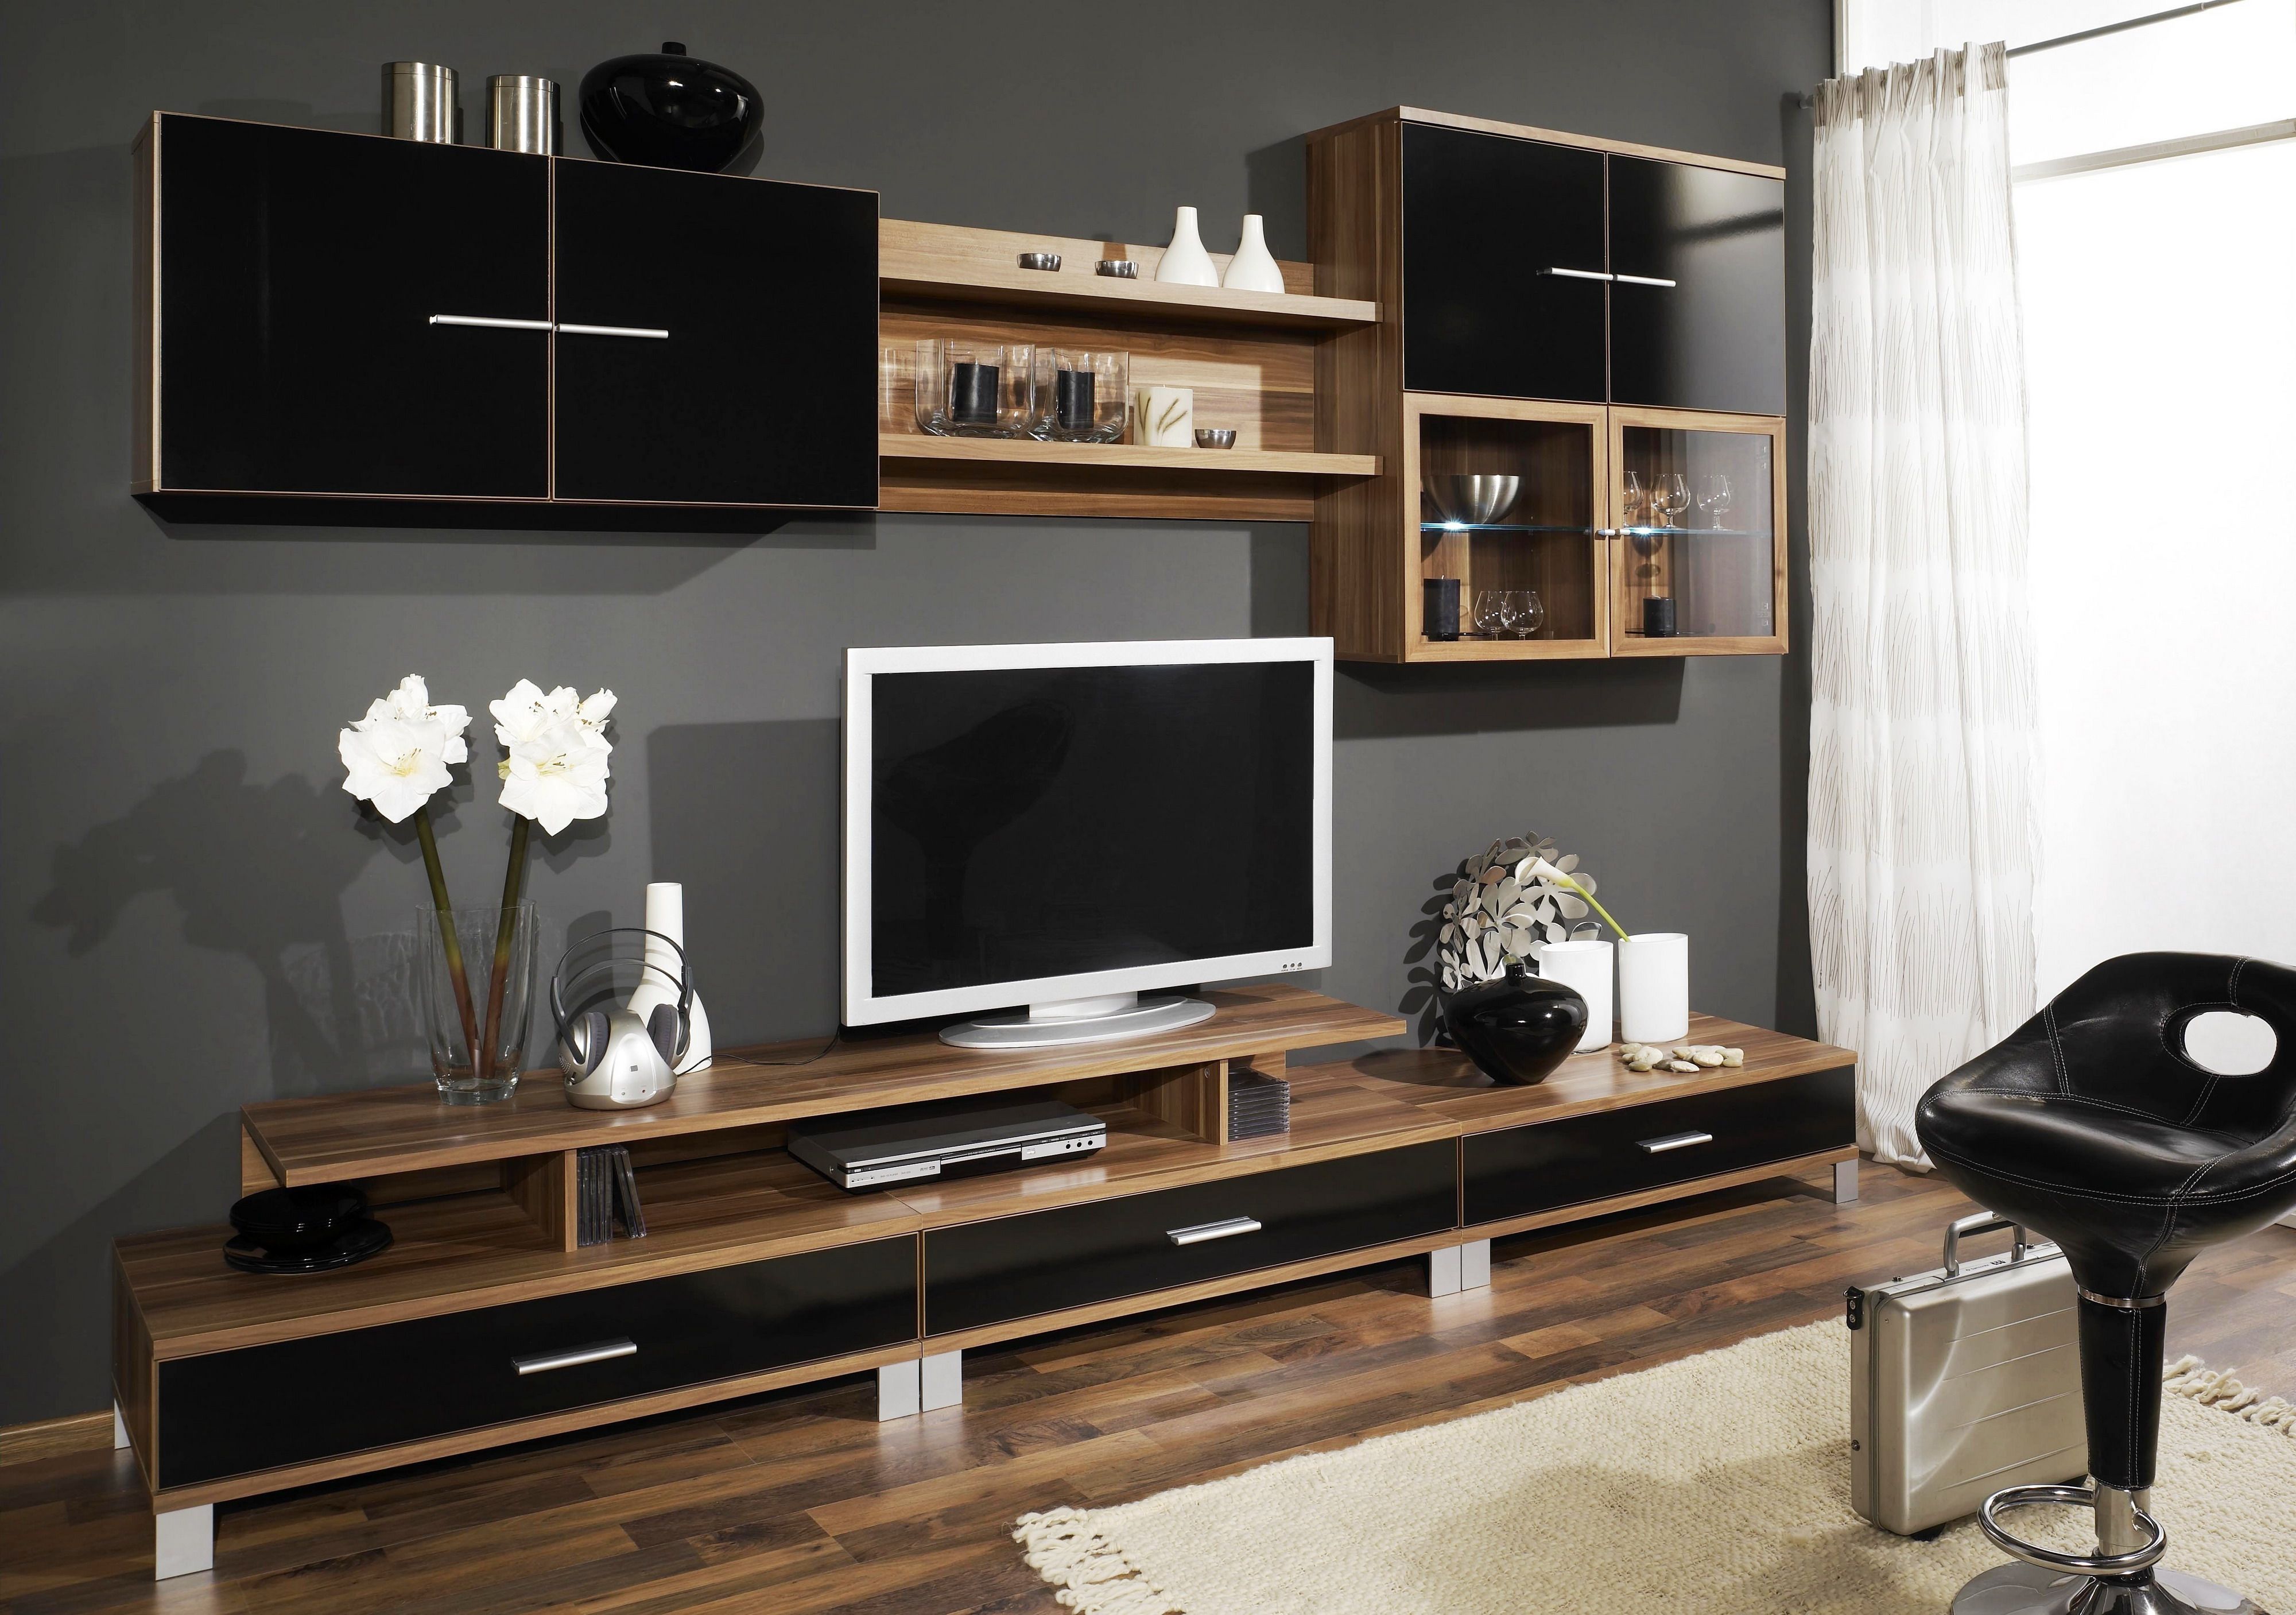 Furniture Computer Wallpapers, Desktop Backgrounds | 4000x2813 ...